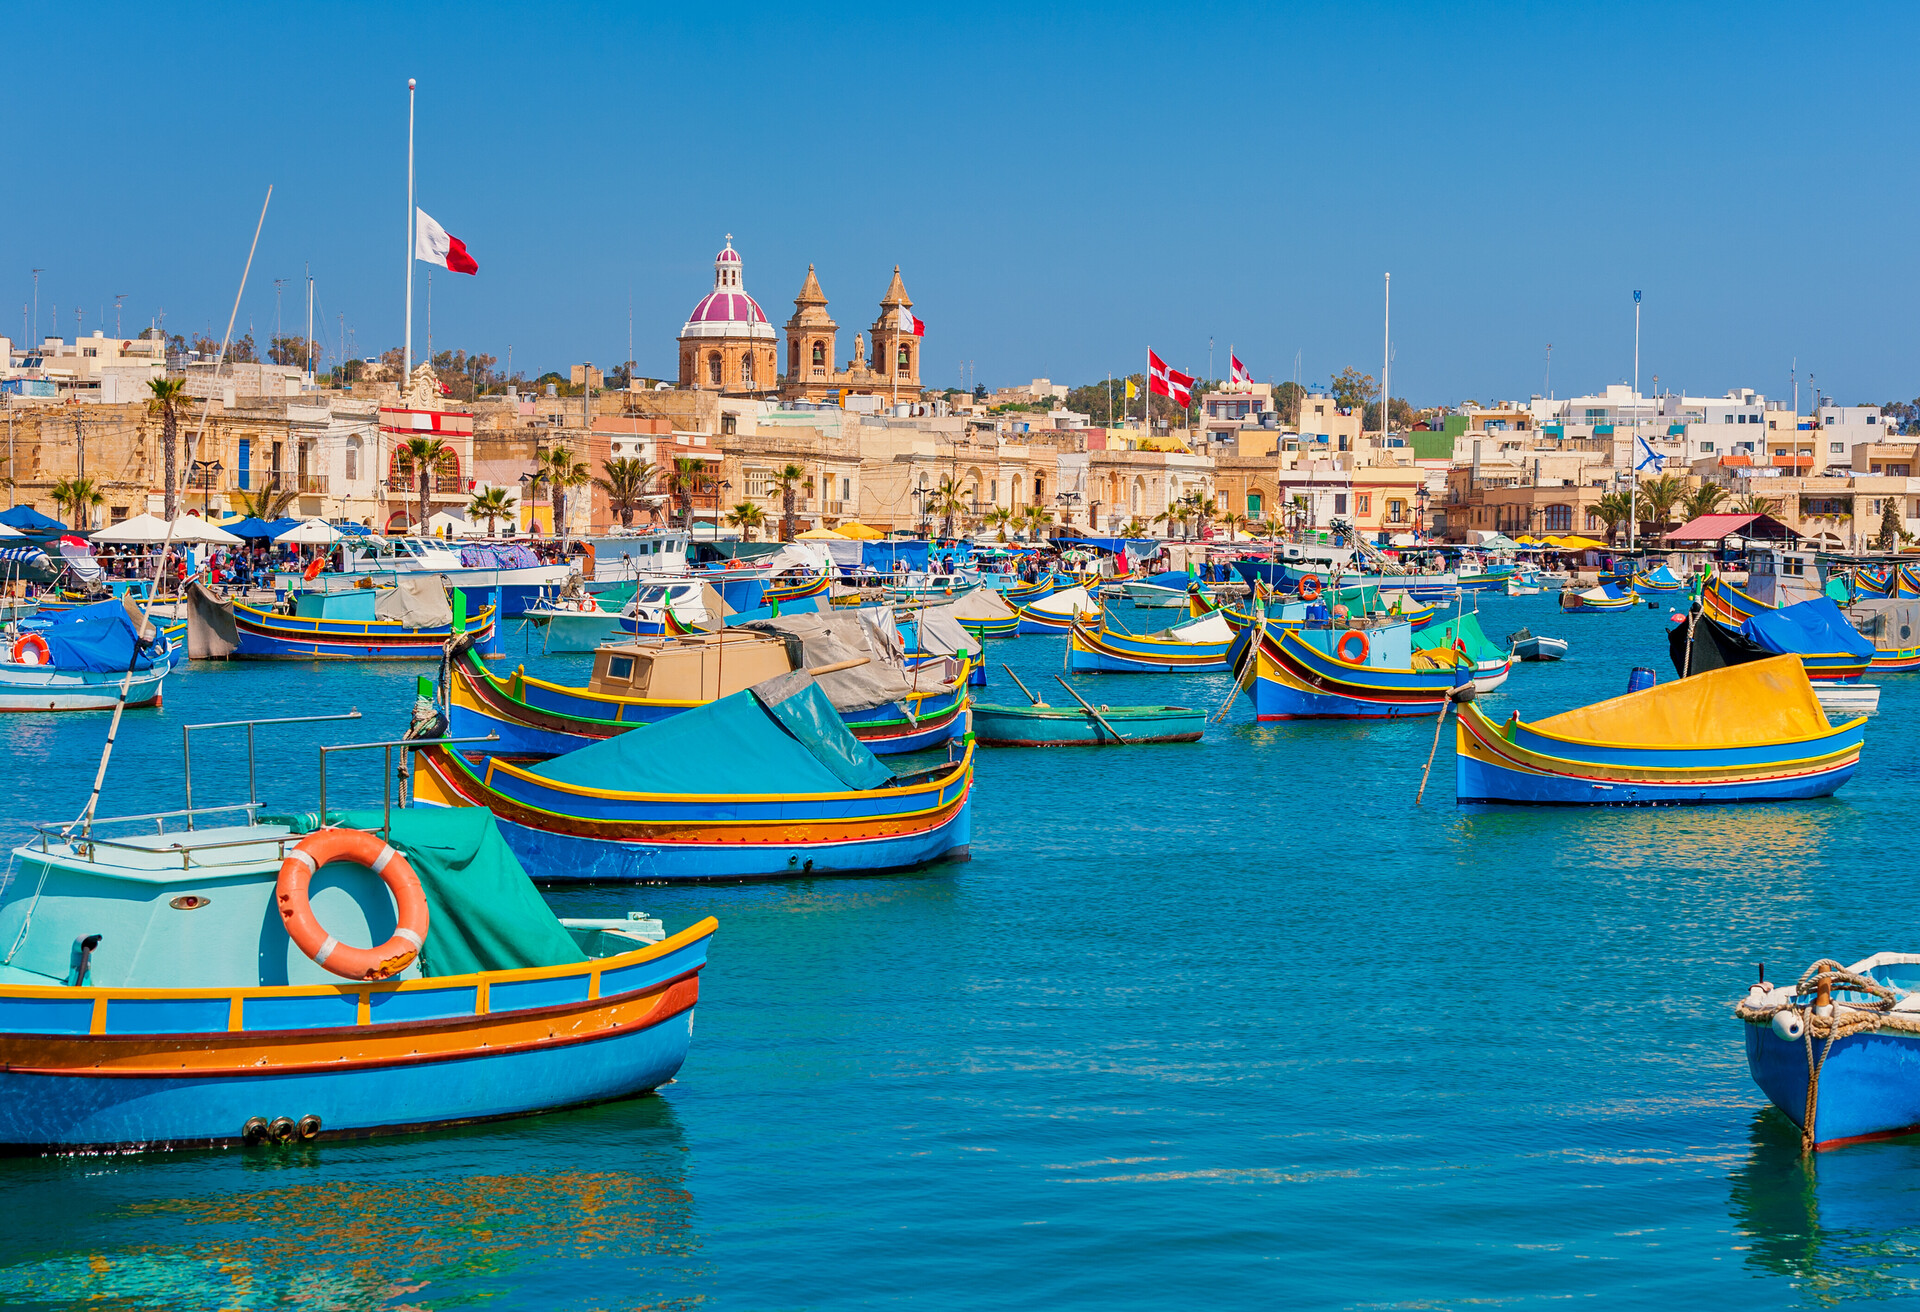 Malta beats 50 other European islands as a holiday destination